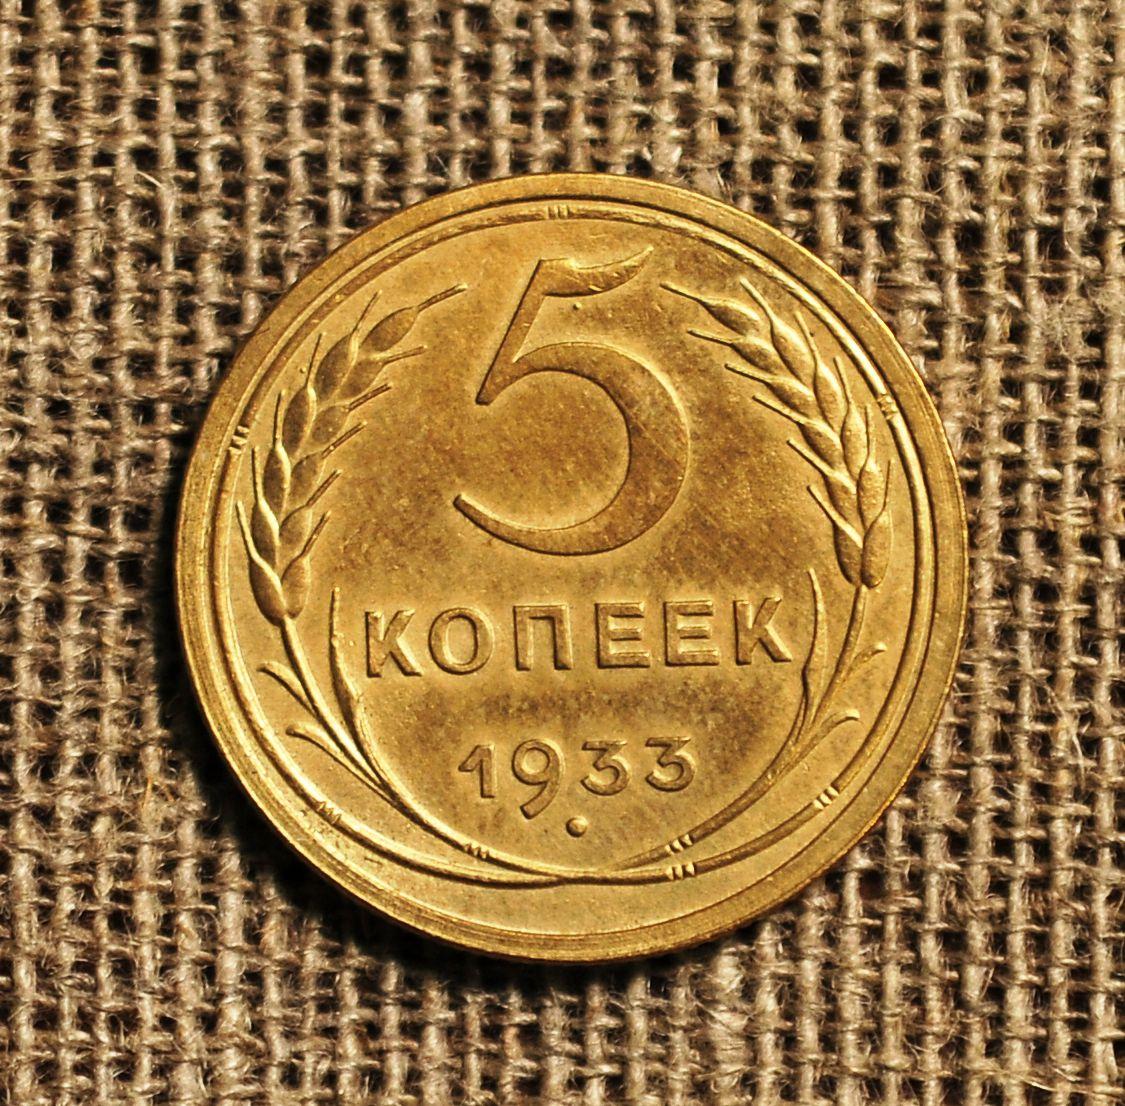 3 рубля 5 копеек. 5 Копеек 1933. 5 Копеек 1933 тираж. Монетка 1933 2 копейки. 5 Копеек СССР.